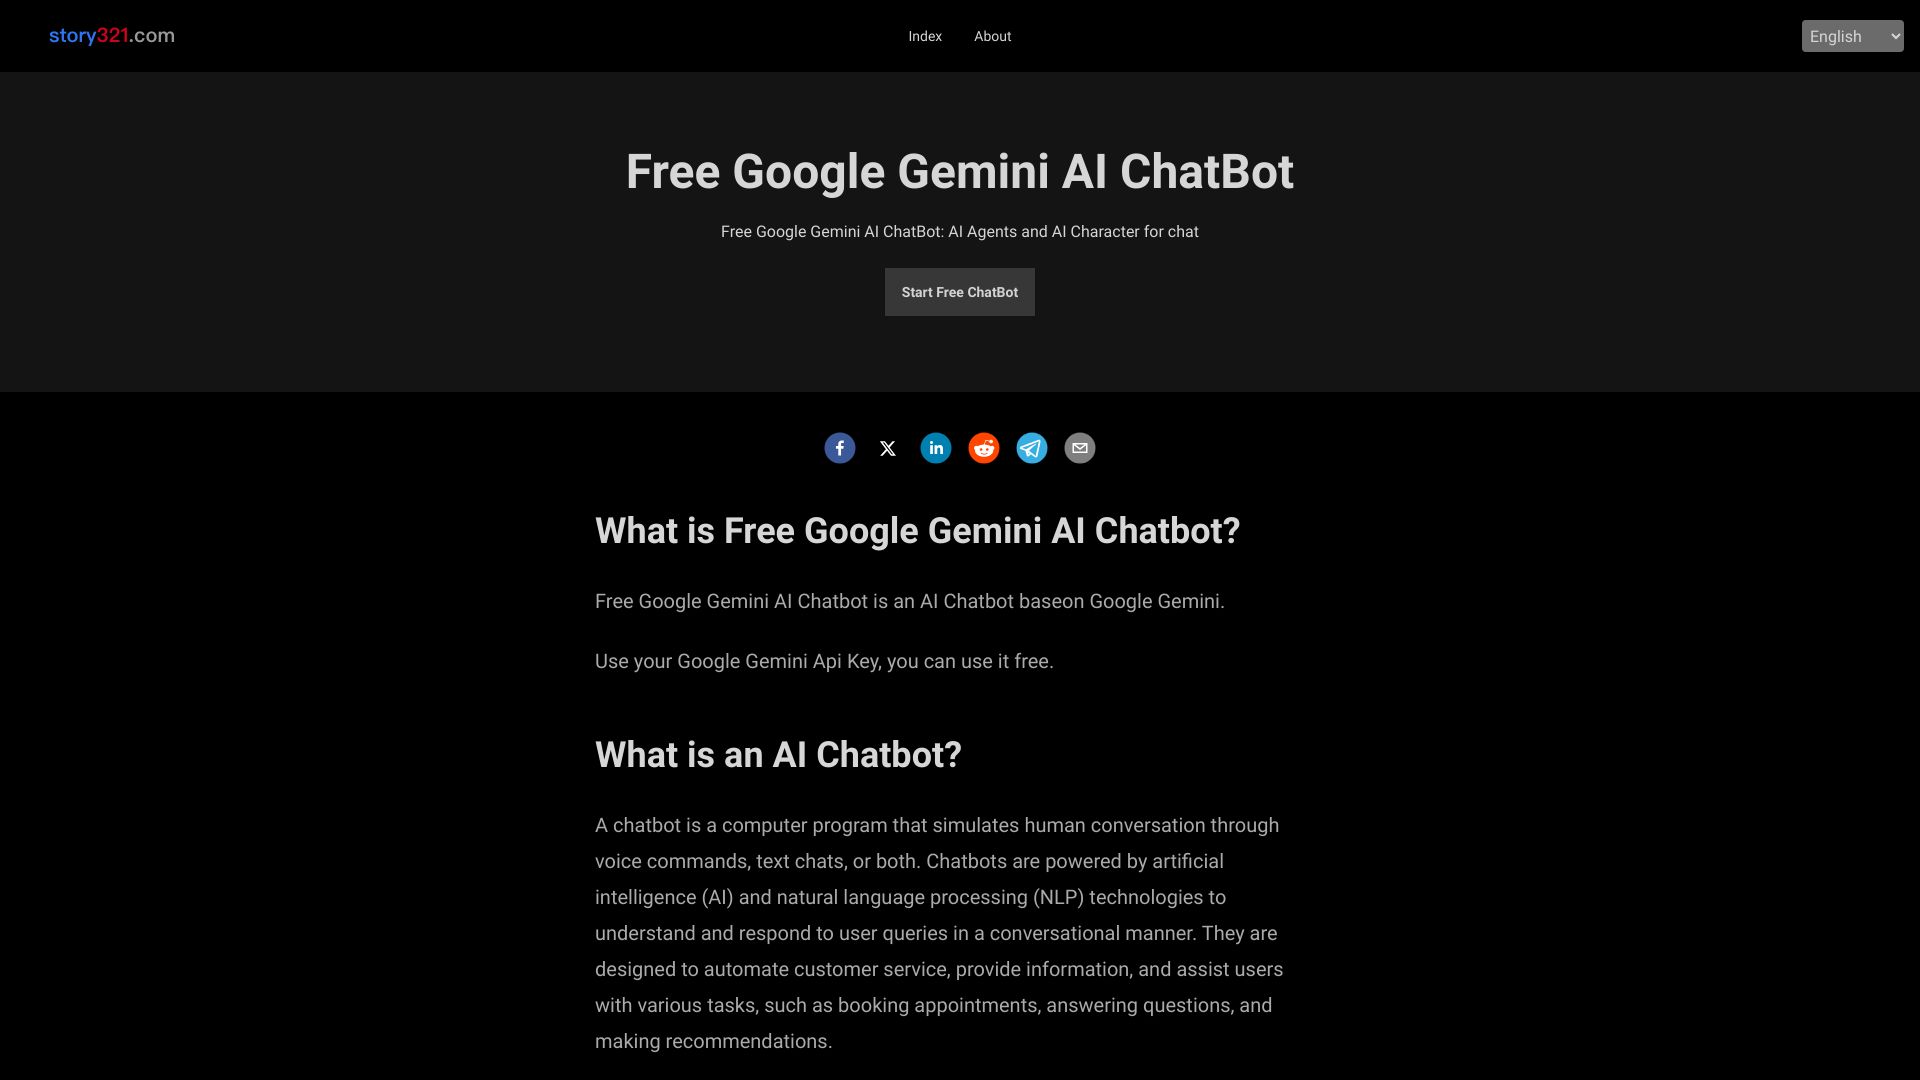 Free Google Gemini AI ChatBot